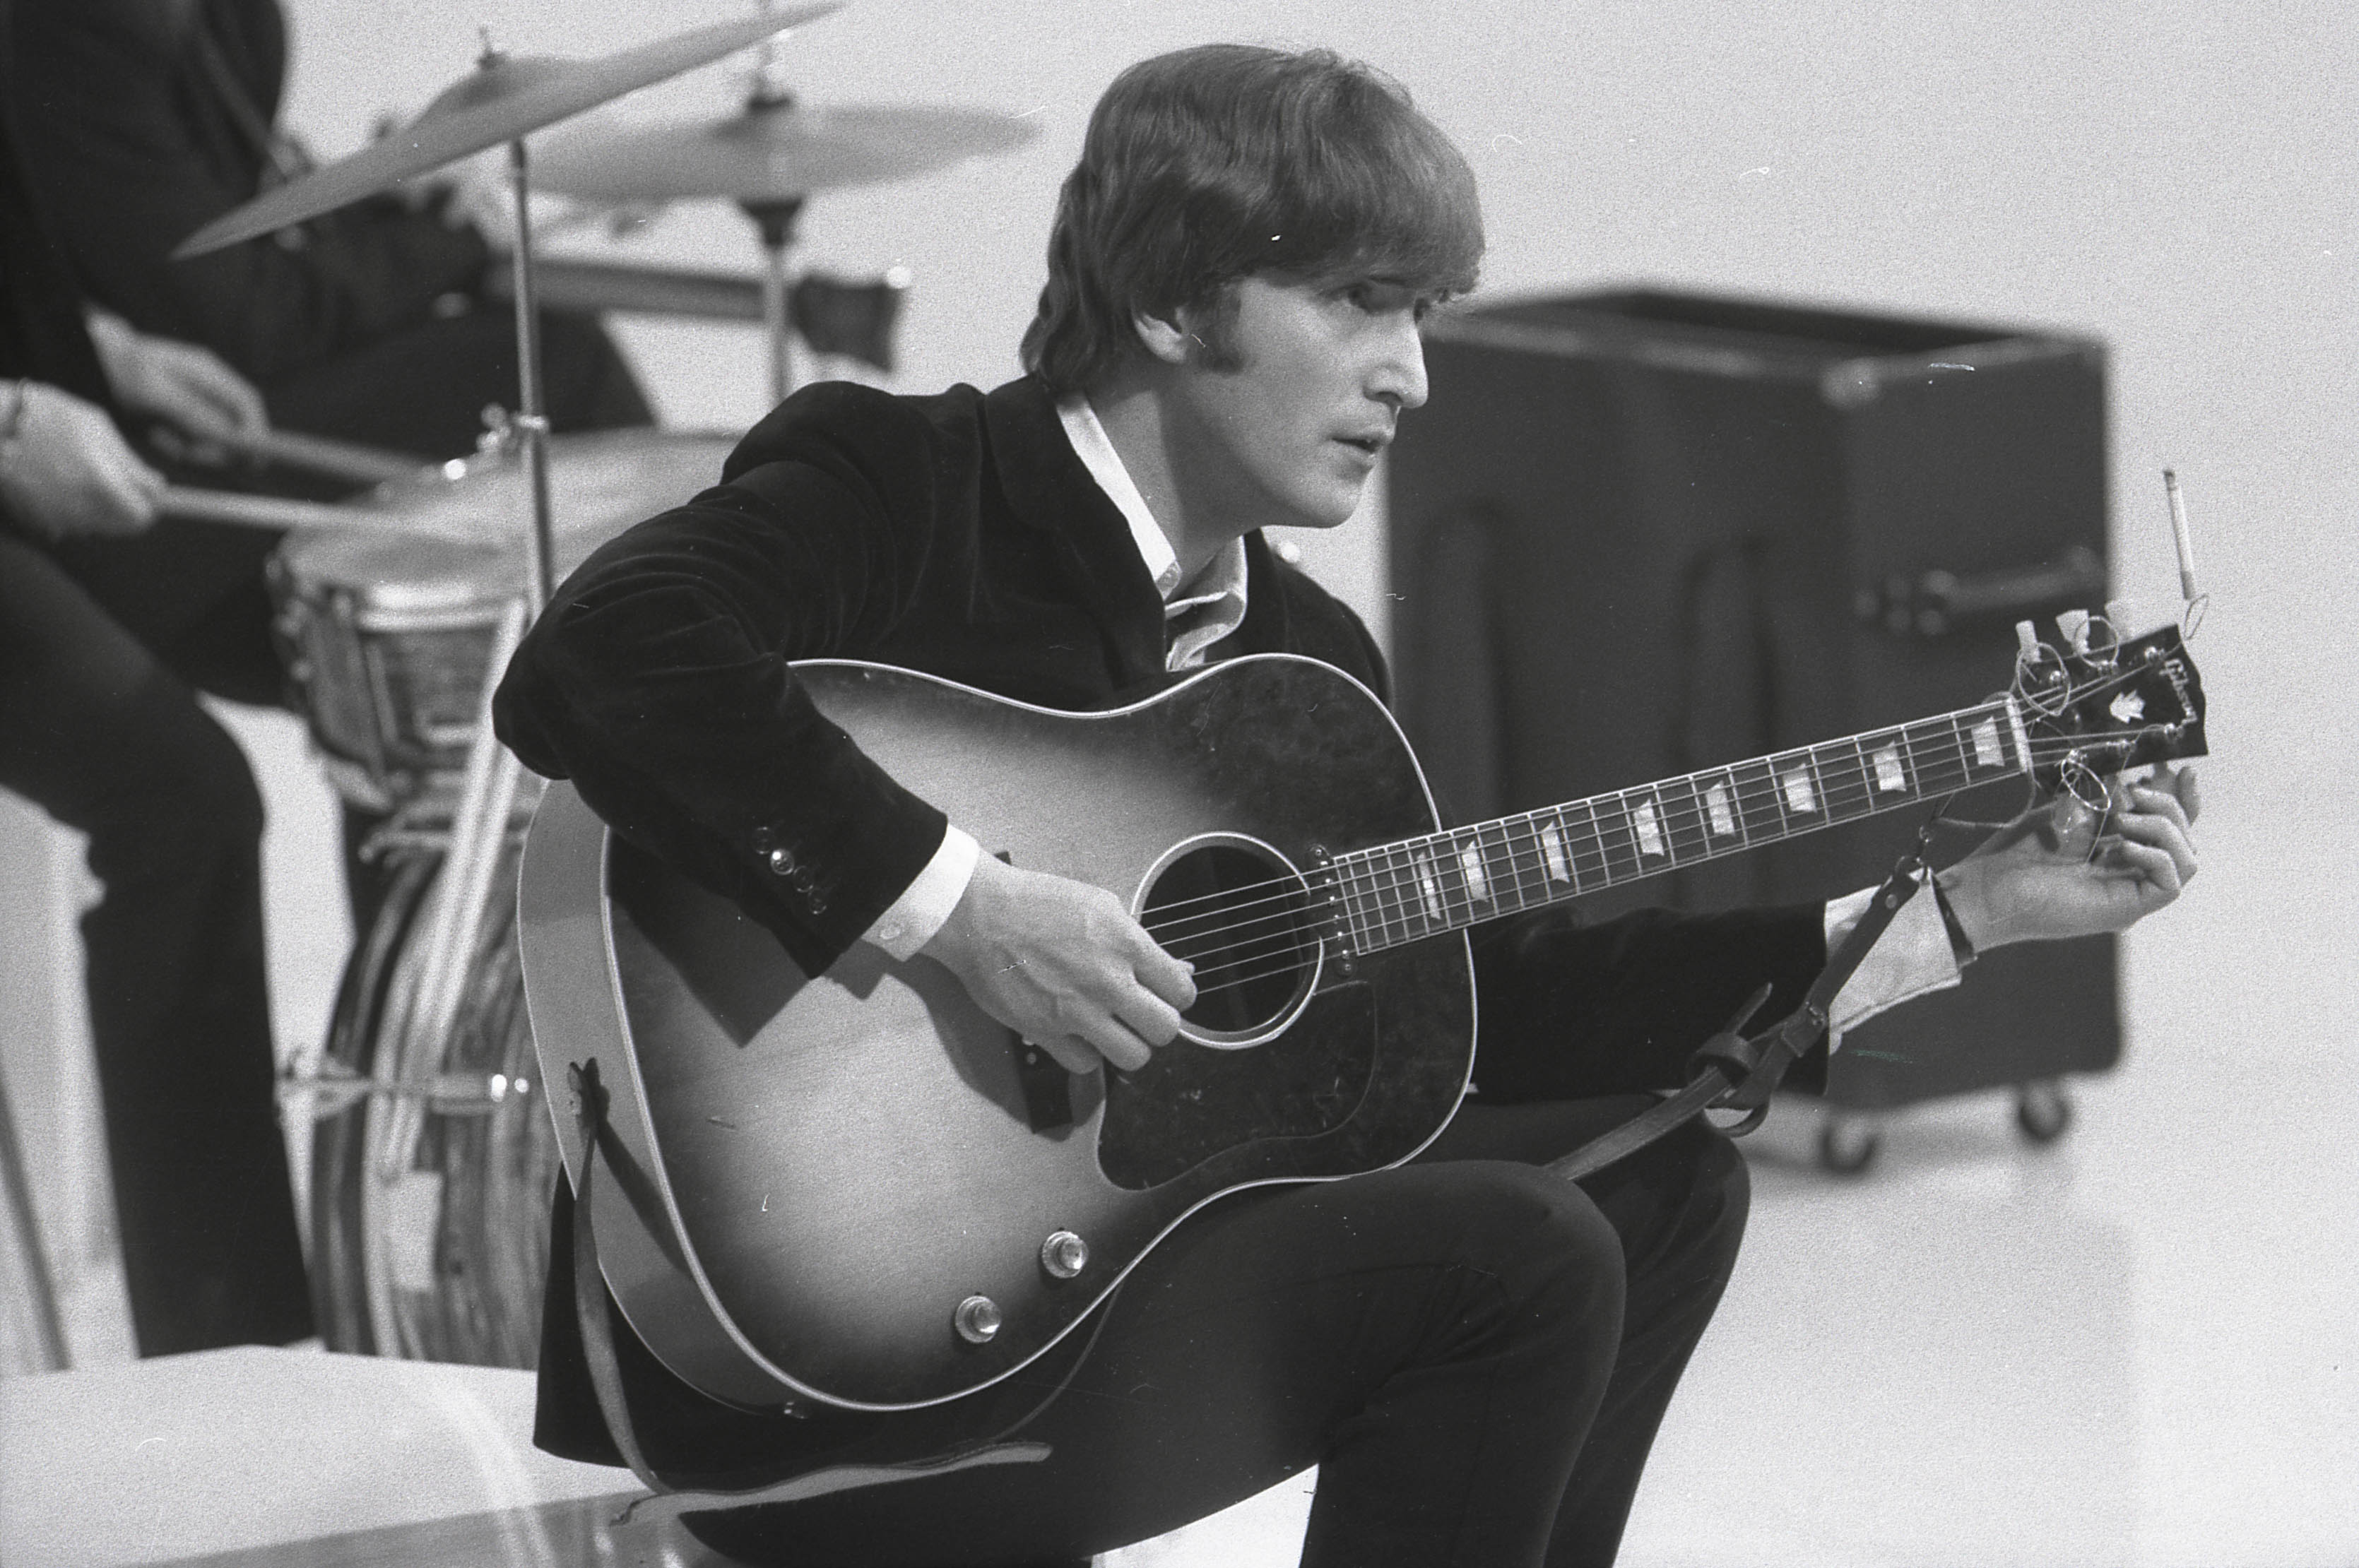 The Beatles' John Lennon with a guitar during the 'White Album' era